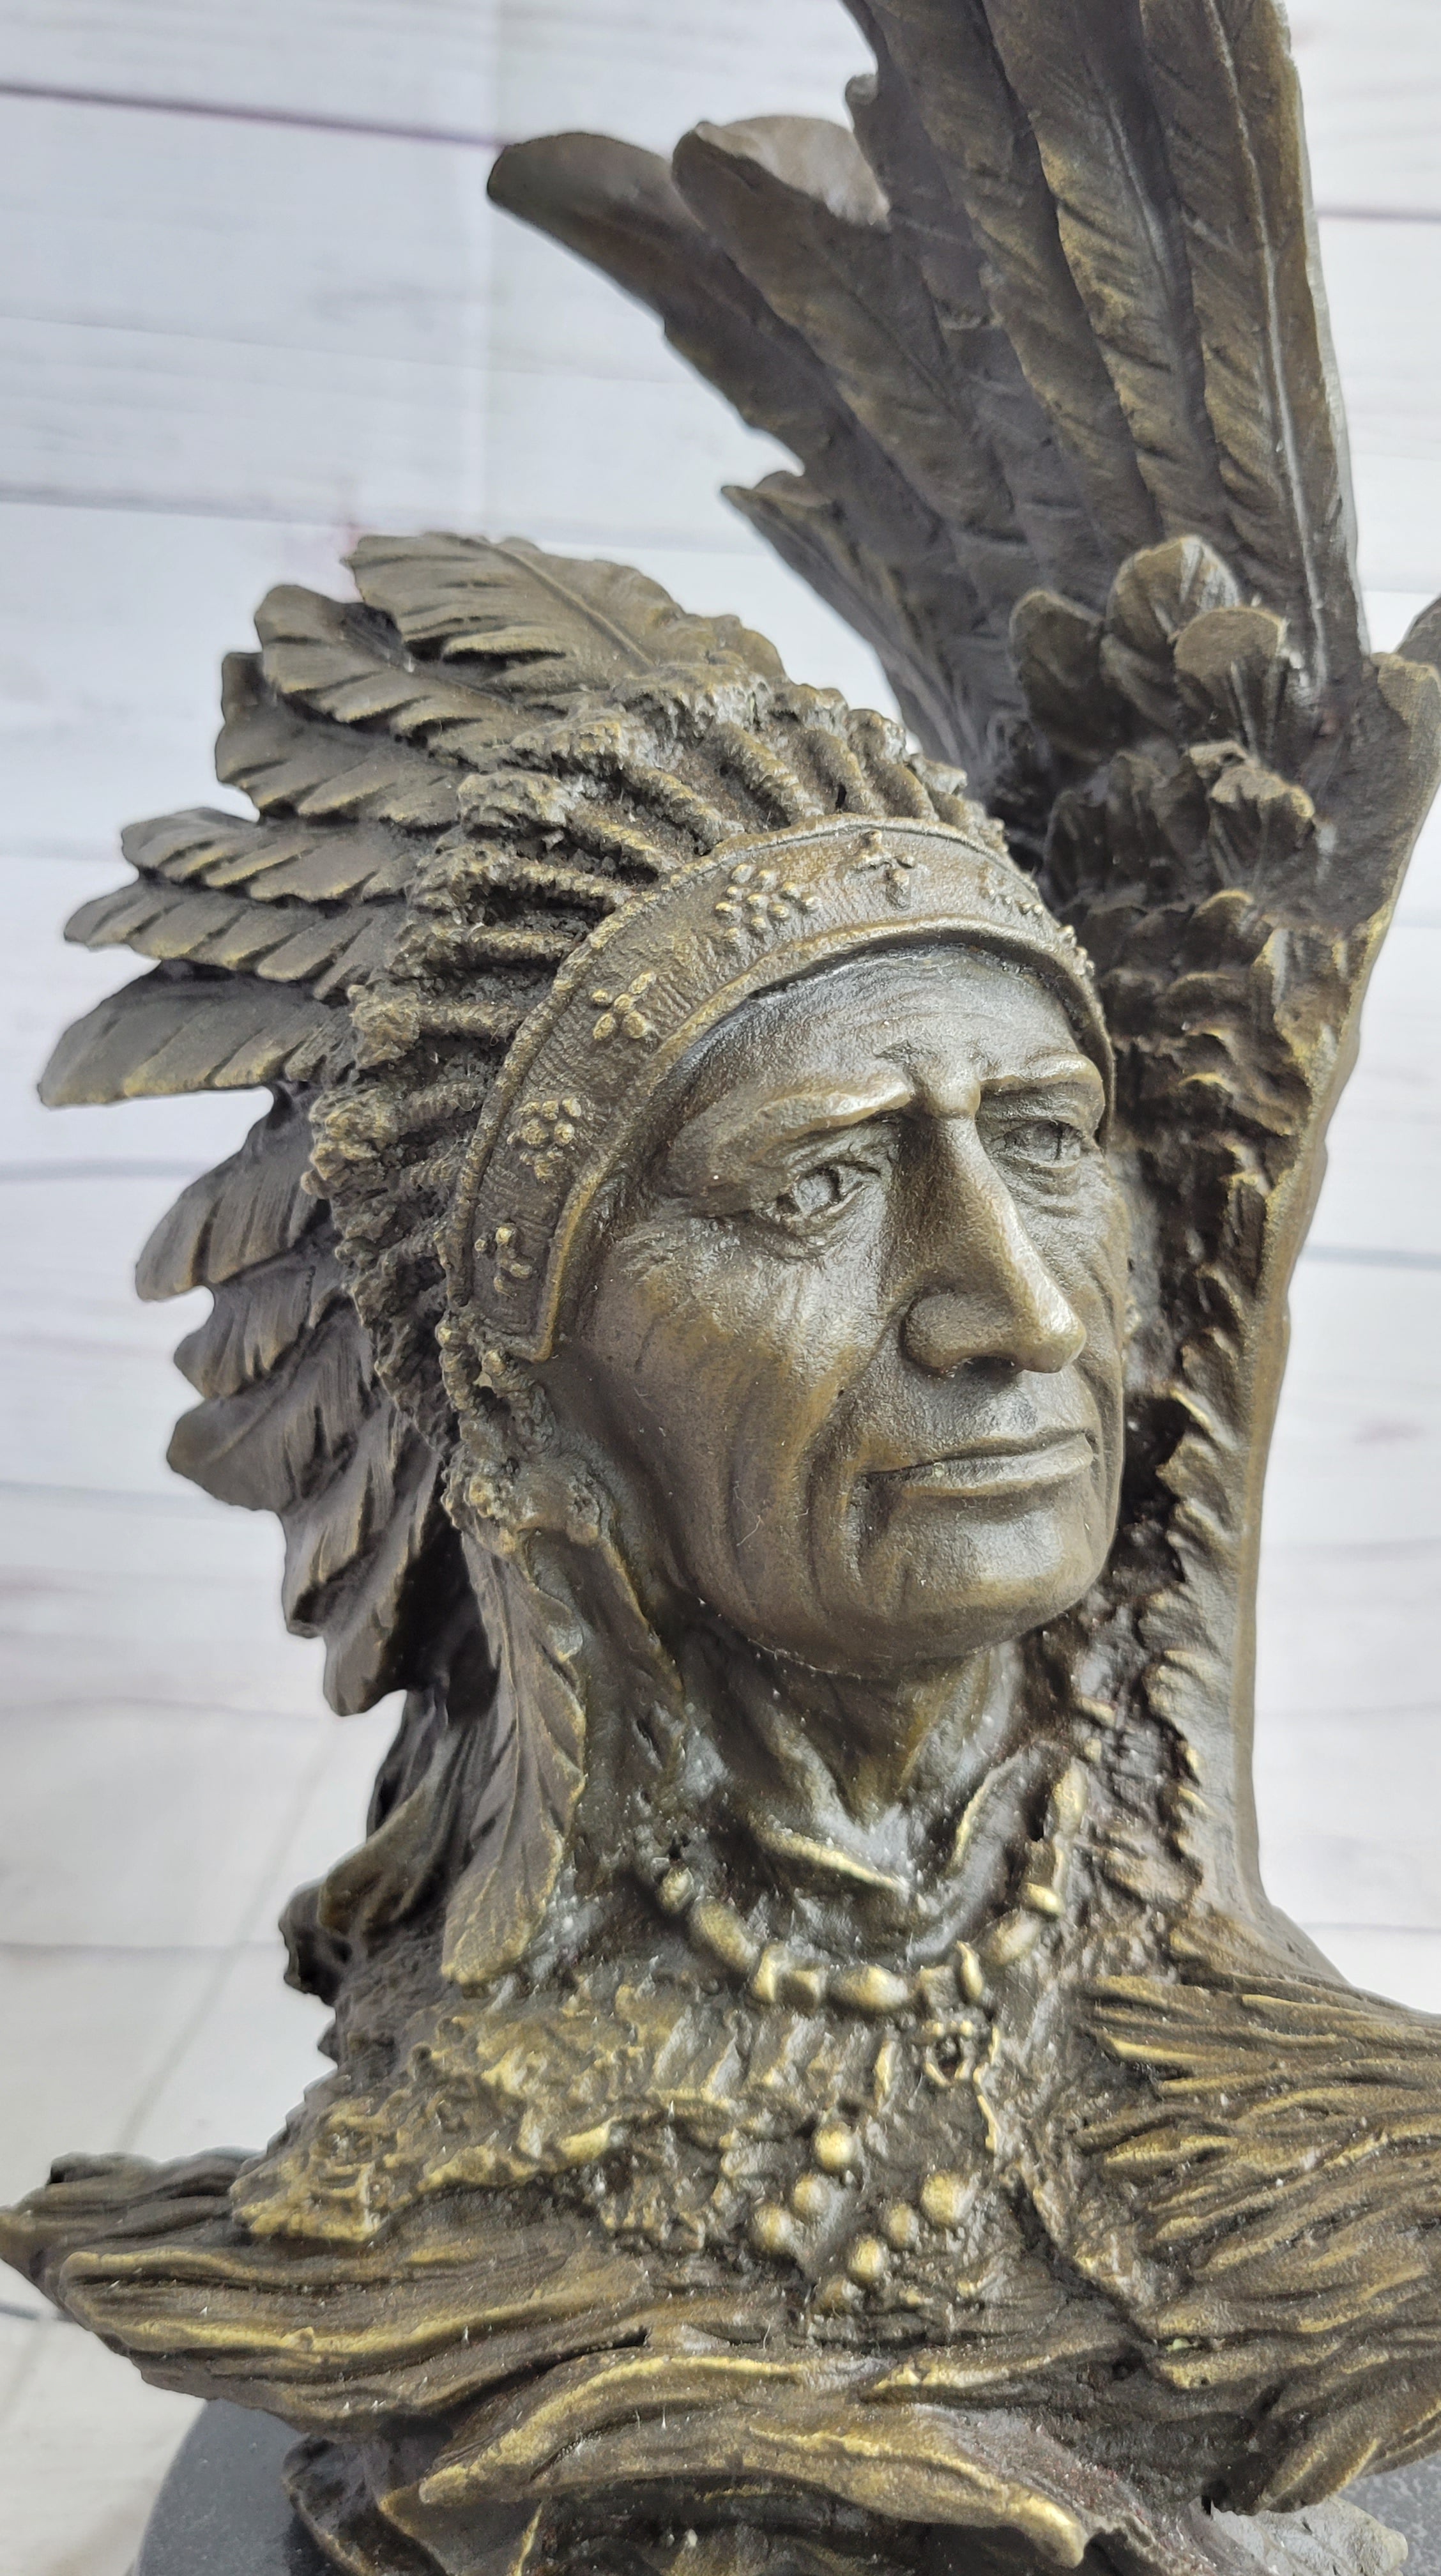 Western Art Hand Made Indian Warrior Chief Bust Bronze Sculpture Figurine Figure